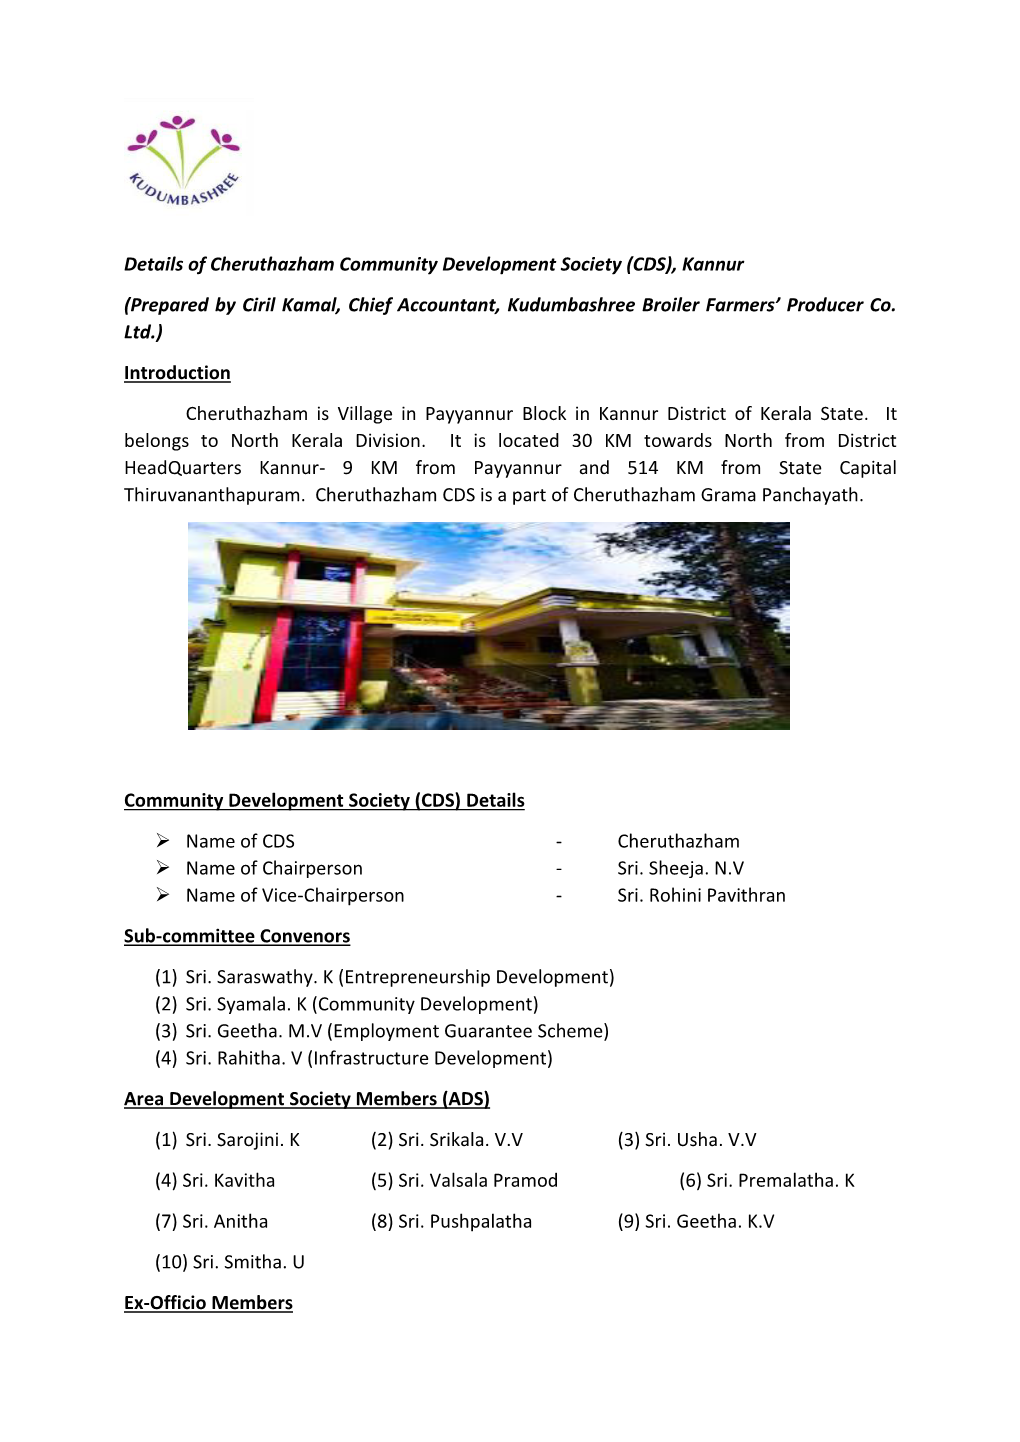 Details of Cheruthazham Community Development Society (CDS), Kannur (Prepared by Ciril Kamal, Chief Accountant, Kudumbashree Broiler Farmers’ Producer Co